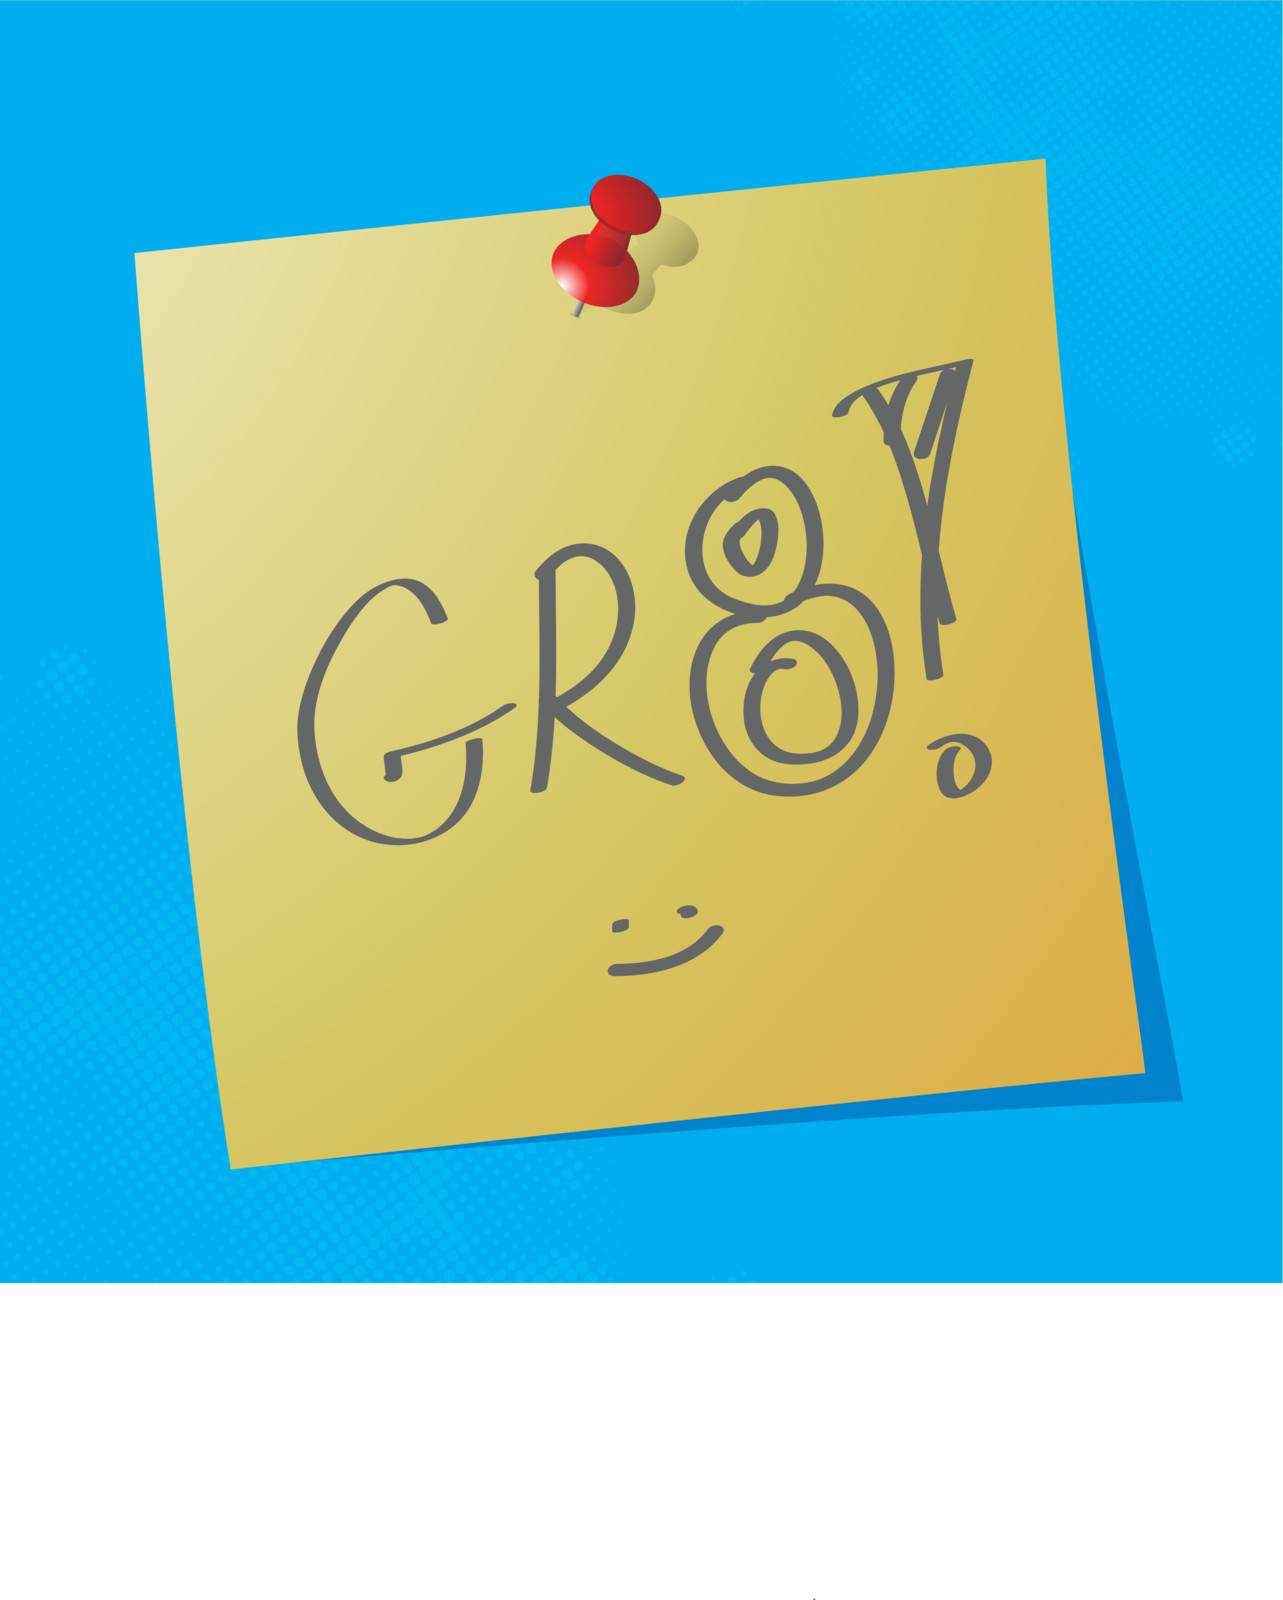 "gr8" handwritten acronym message on sticky paper, eps10 vector illustration